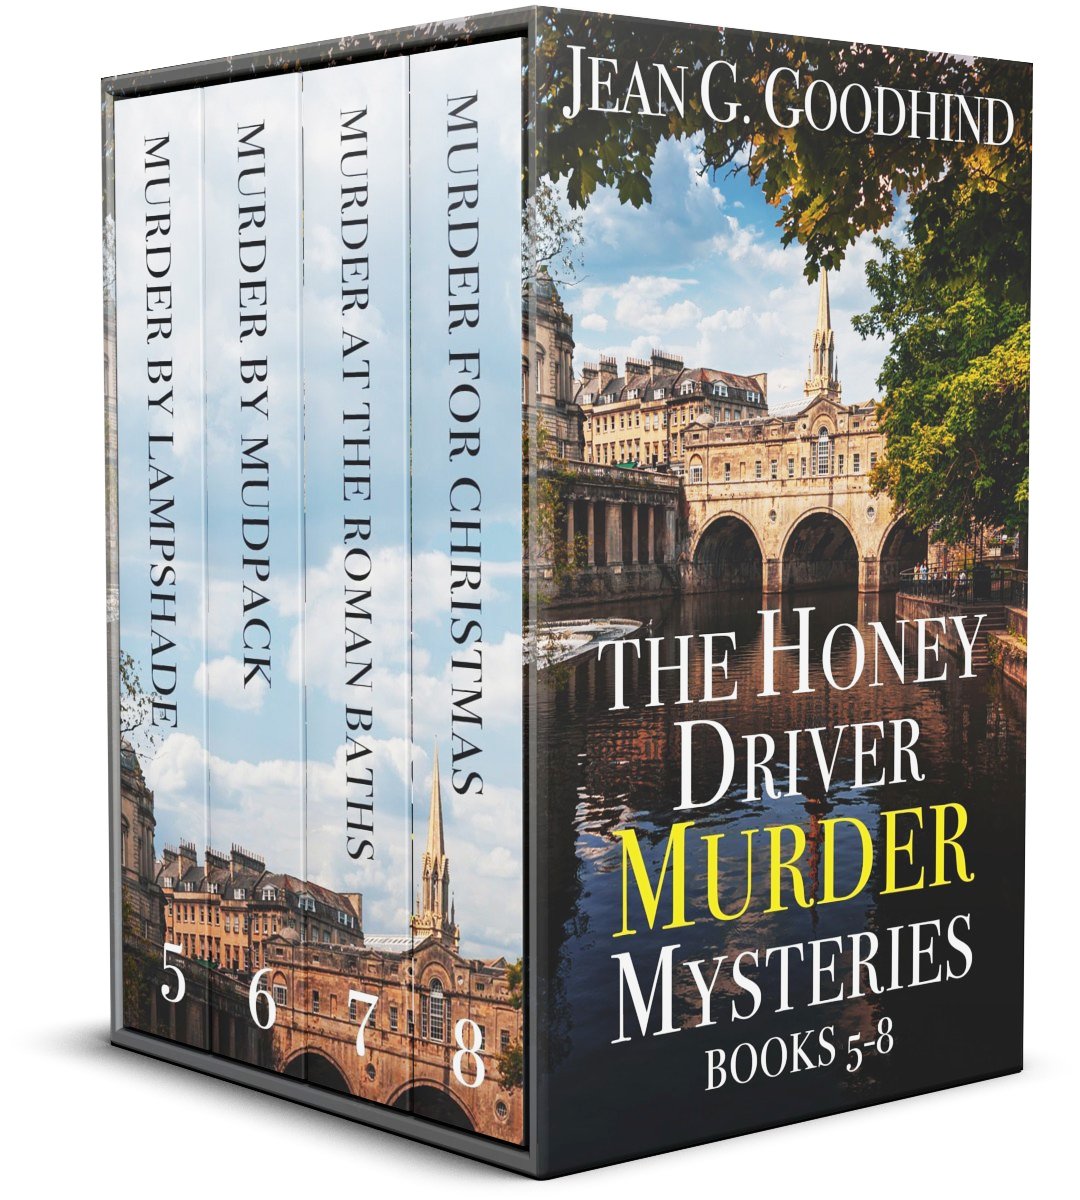 THE HONEY DRIVER MURDER MYSTERIES BOOKS 5-8 cover publish.jpg